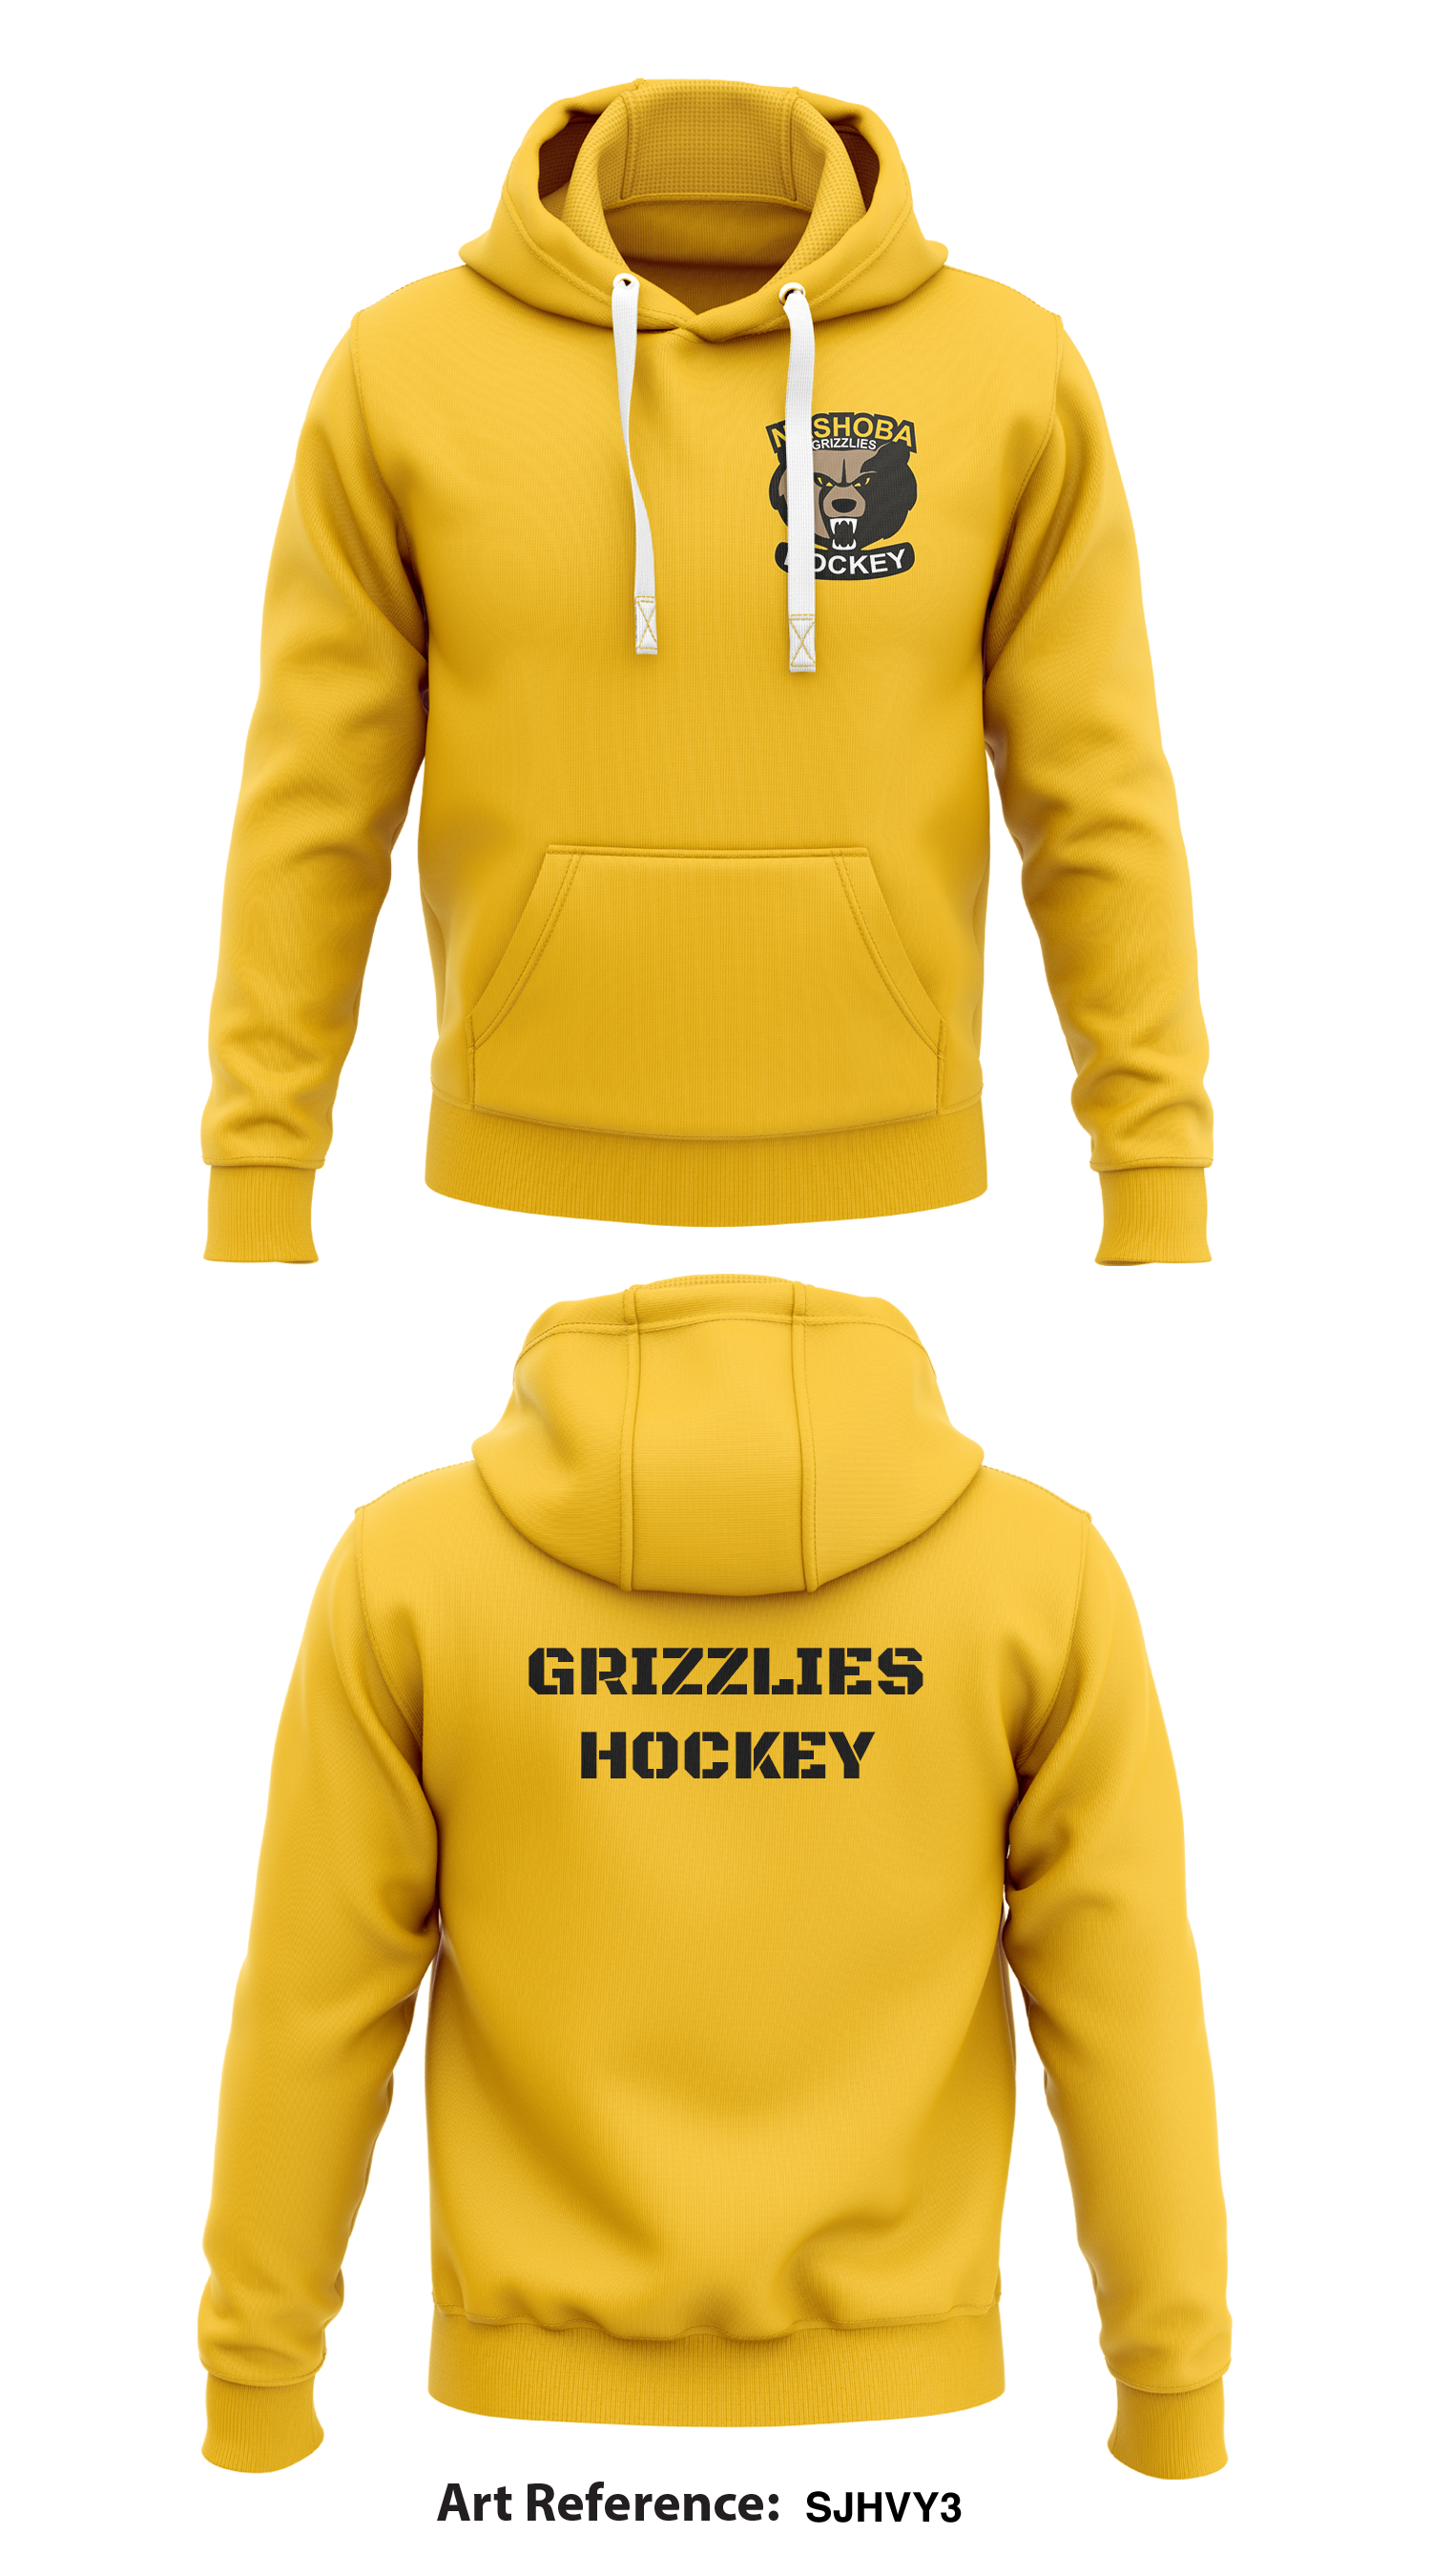 grizzlies sweater